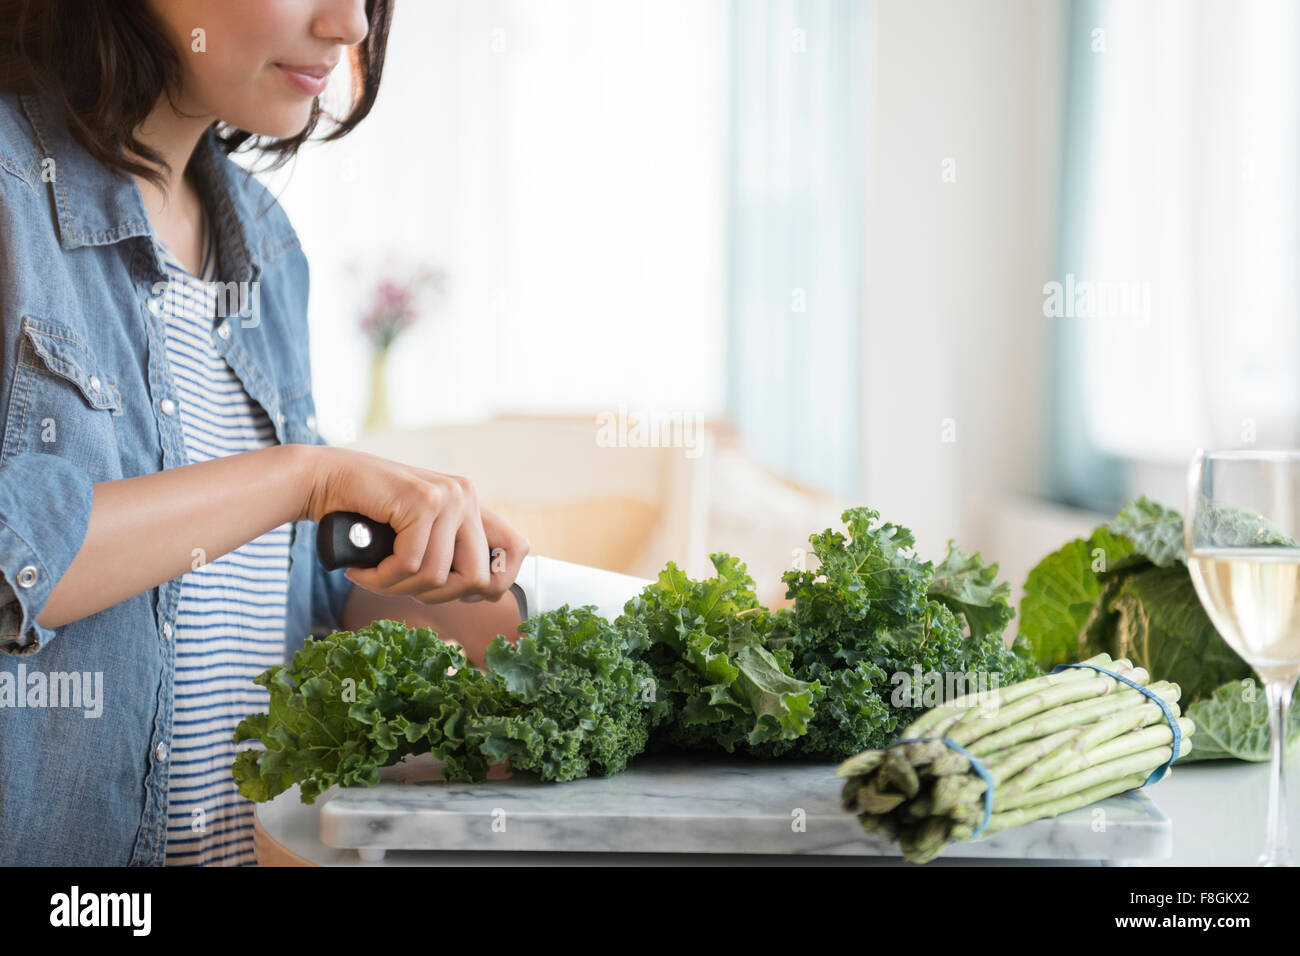 Hispanic woman chopping salad greens Stock Photo